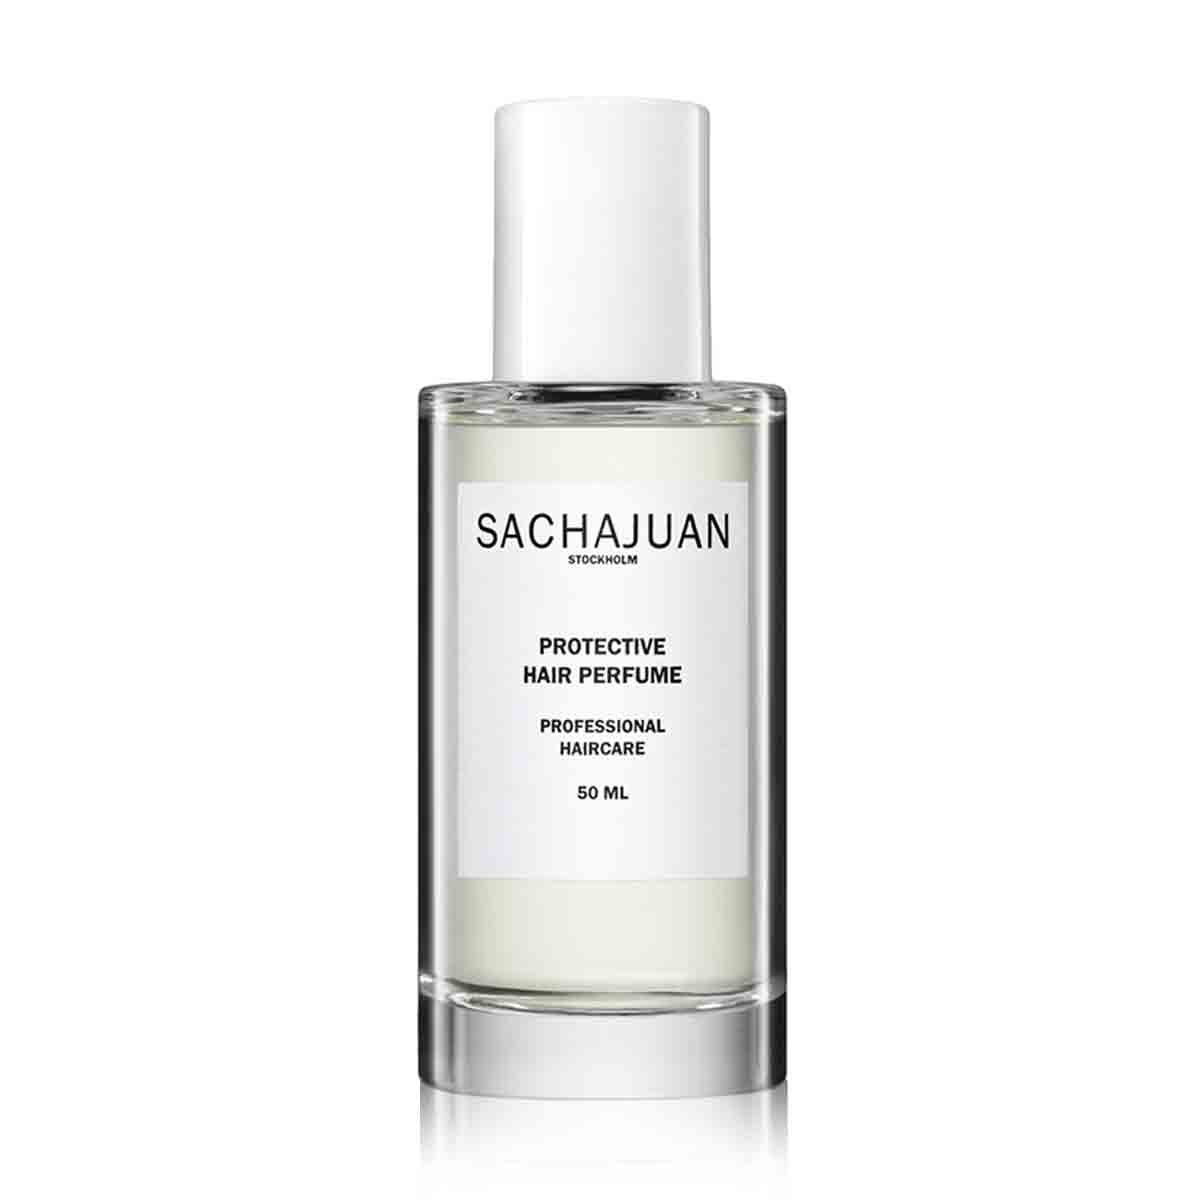 Sachajuan Protective Hair Perfume 50 ml